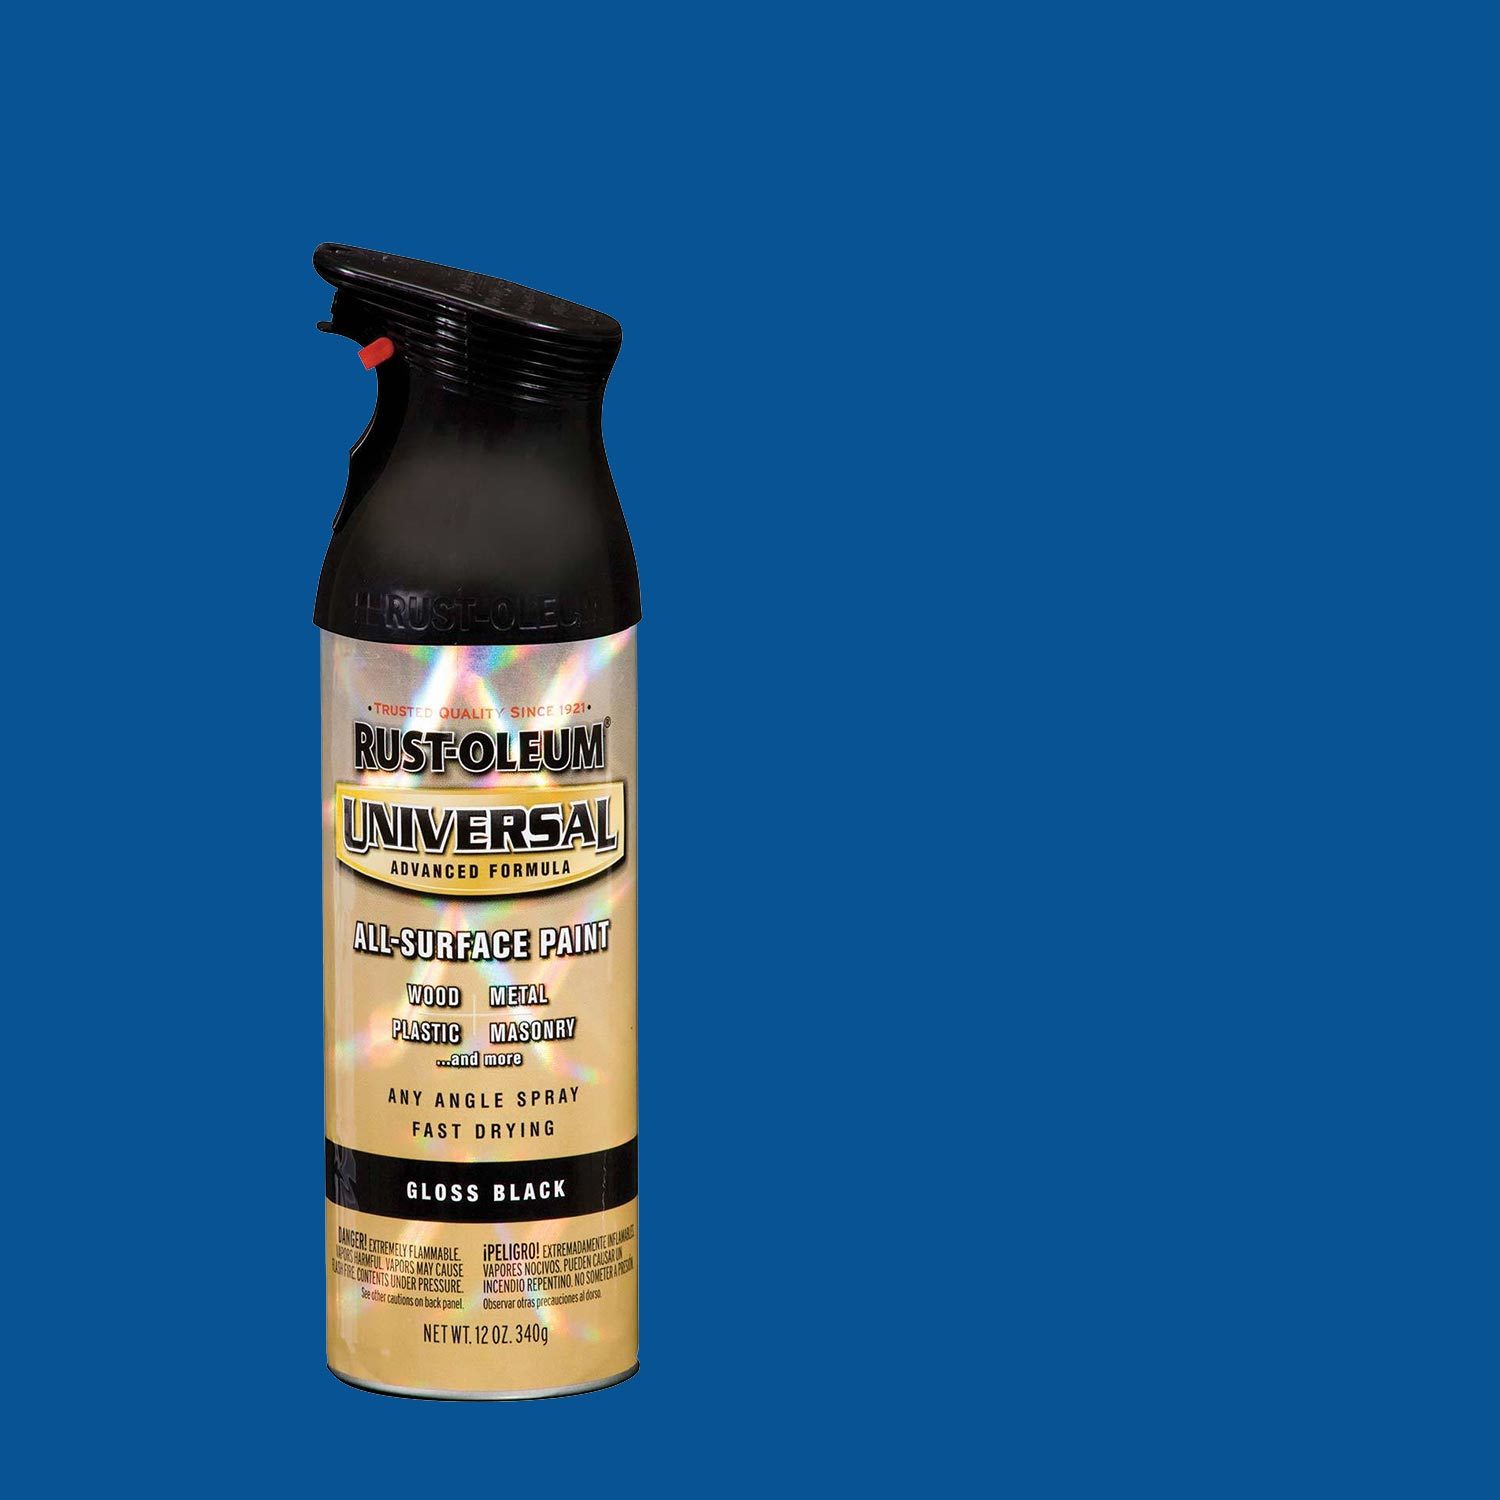 Rust-Oleum Imagine 4-Pack Gloss Royal Blue Glitter Spray Paint